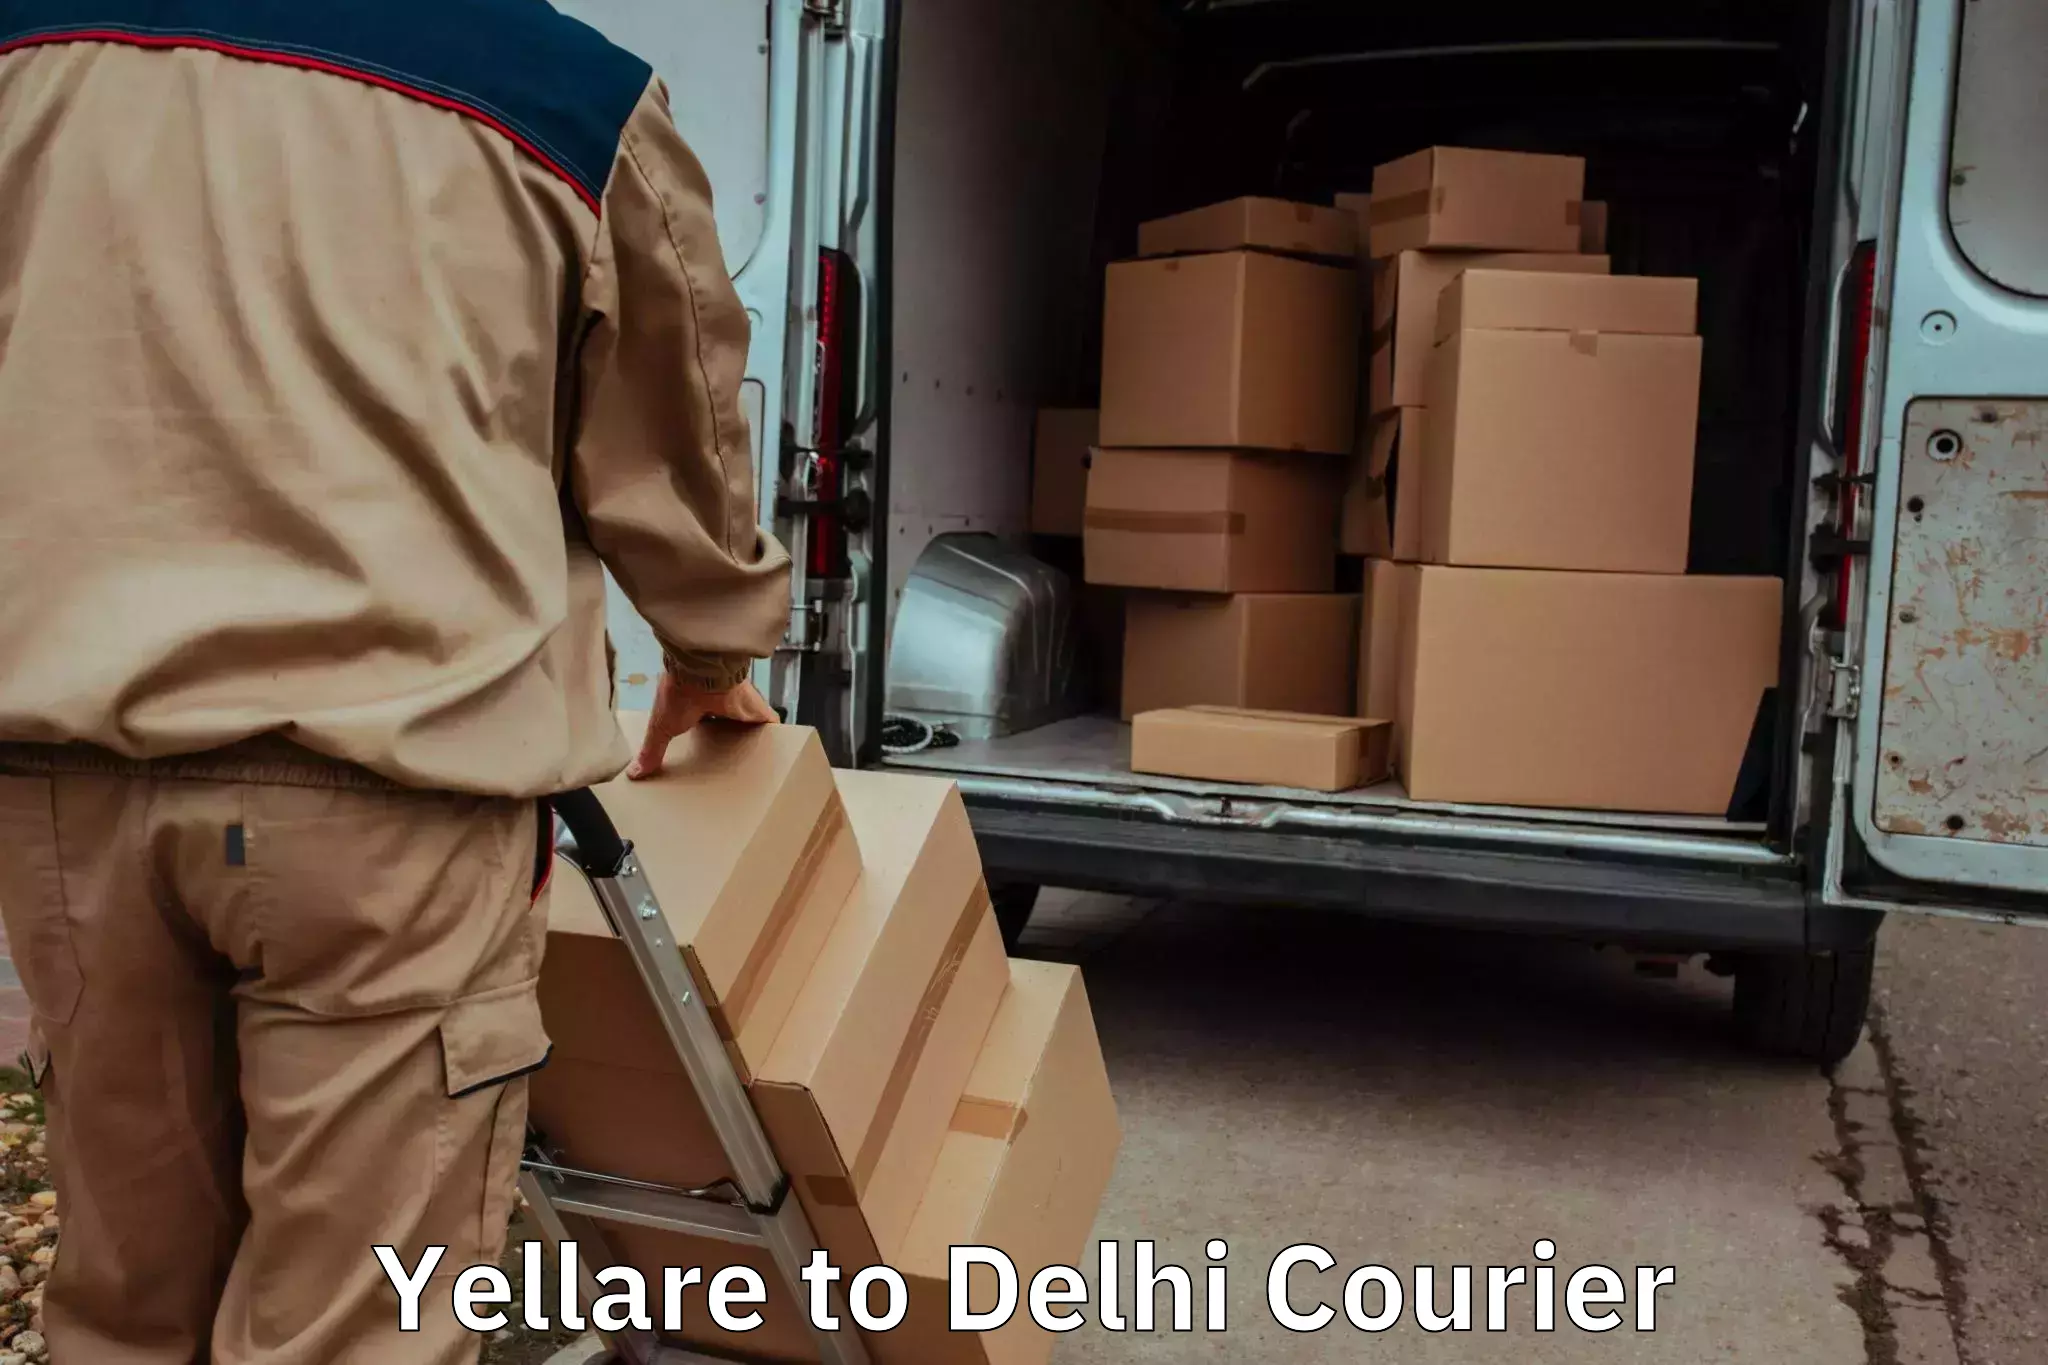 Specialized moving company Yellare to Delhi